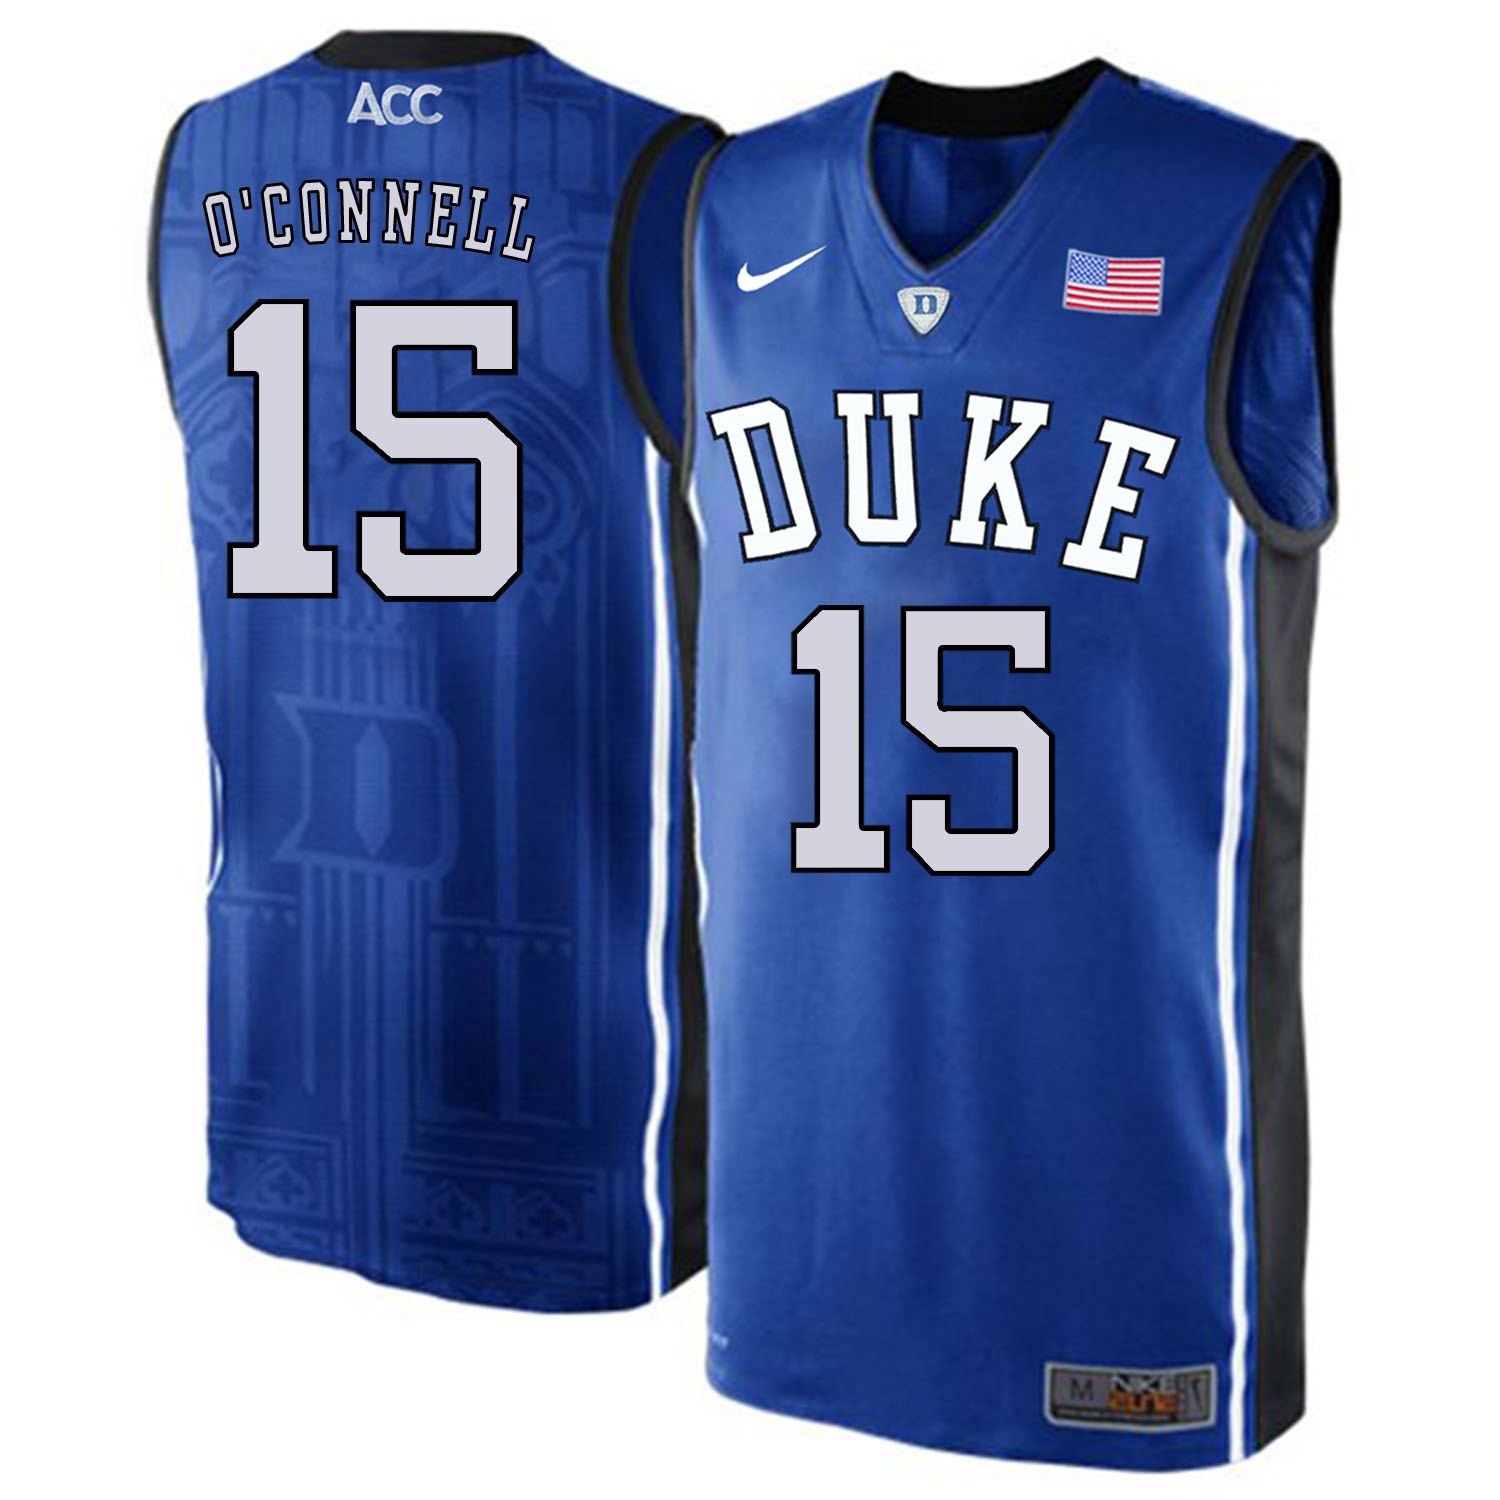 Duke Blue Devils 15 Alex O'Connell Blue Elite Nike College Basketball Jersey